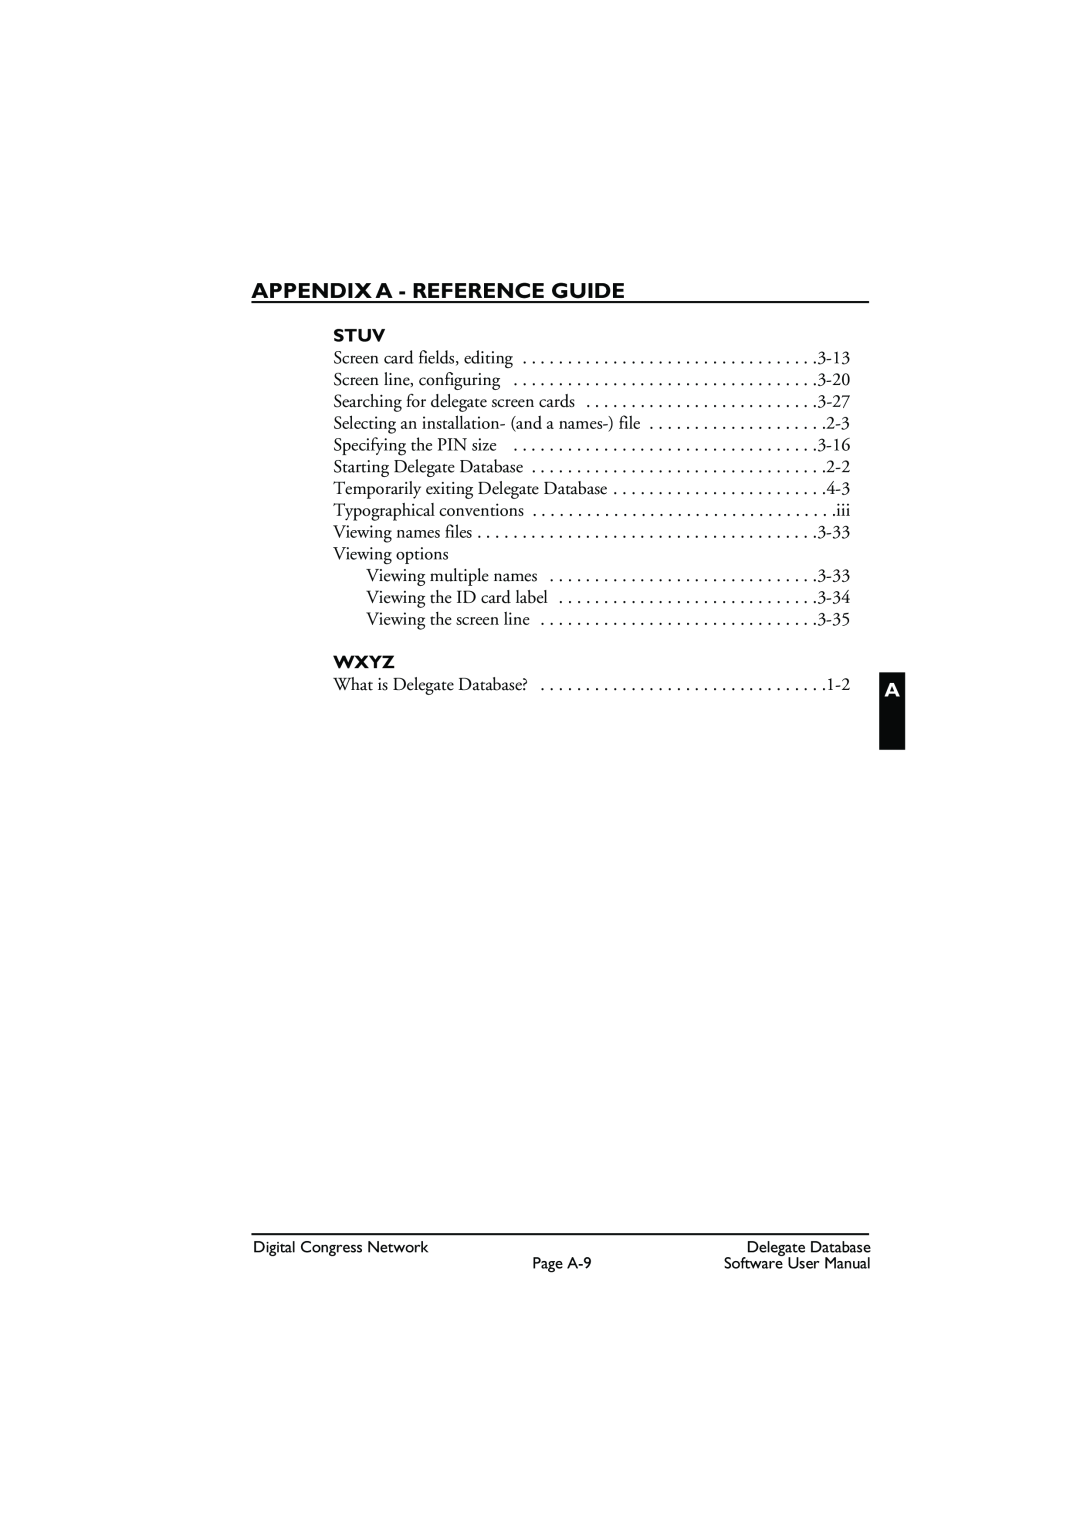 Bosch Appliances LBB3580 user manual Stuv, Wxyz, Appendix A - Reference Guide 